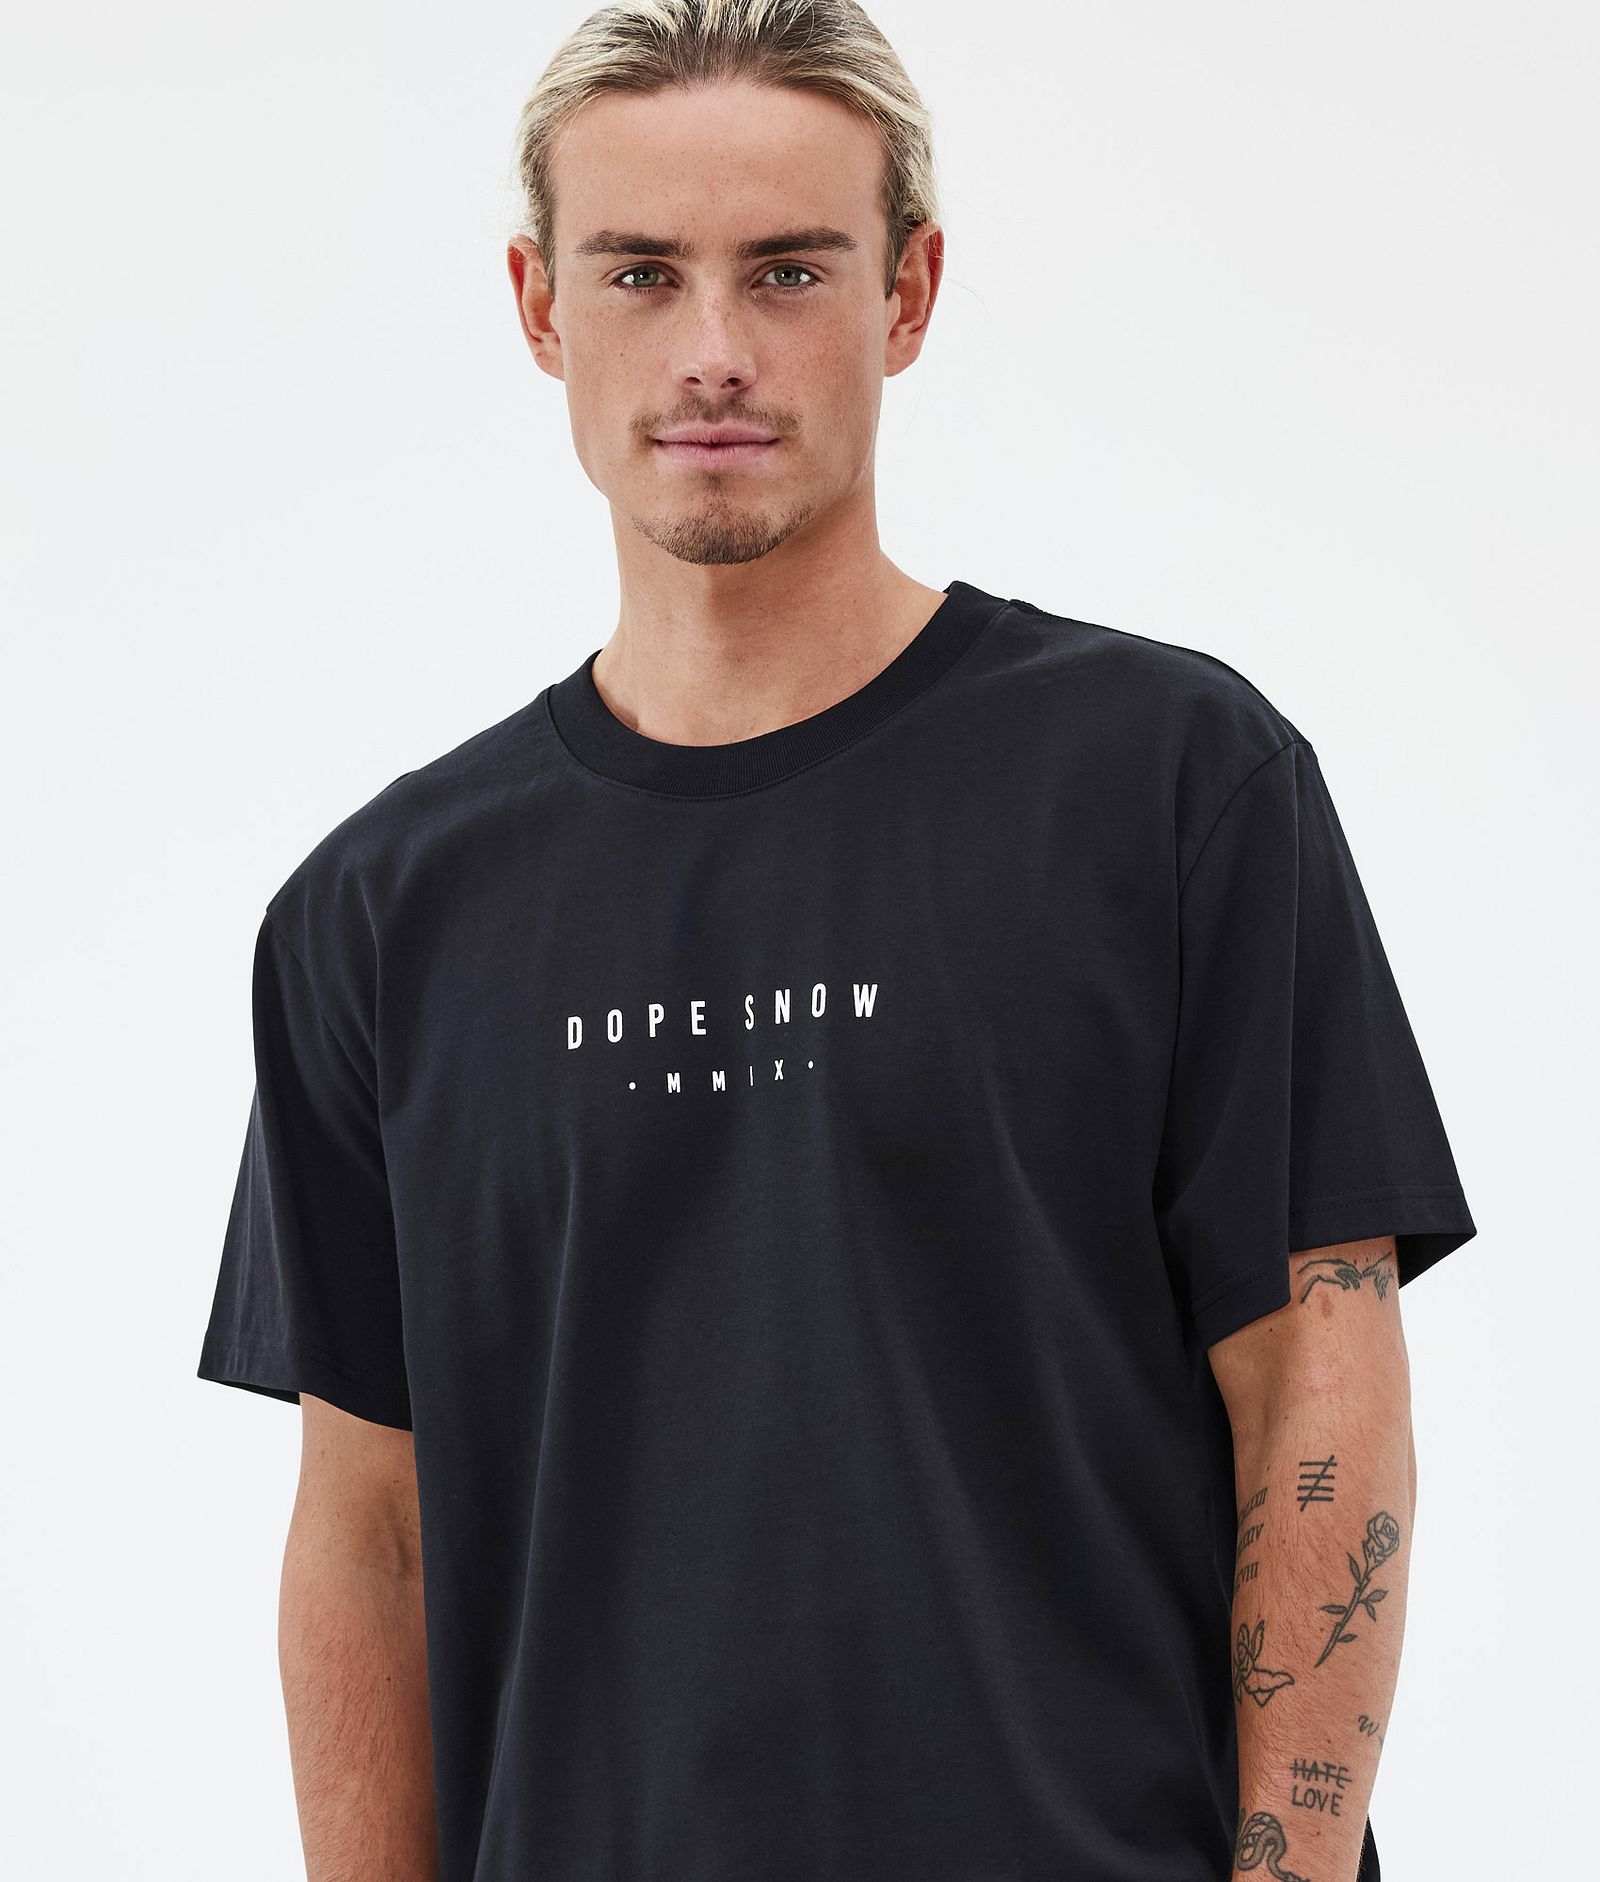 Dope Standard Camiseta Hombre Silhouette Black